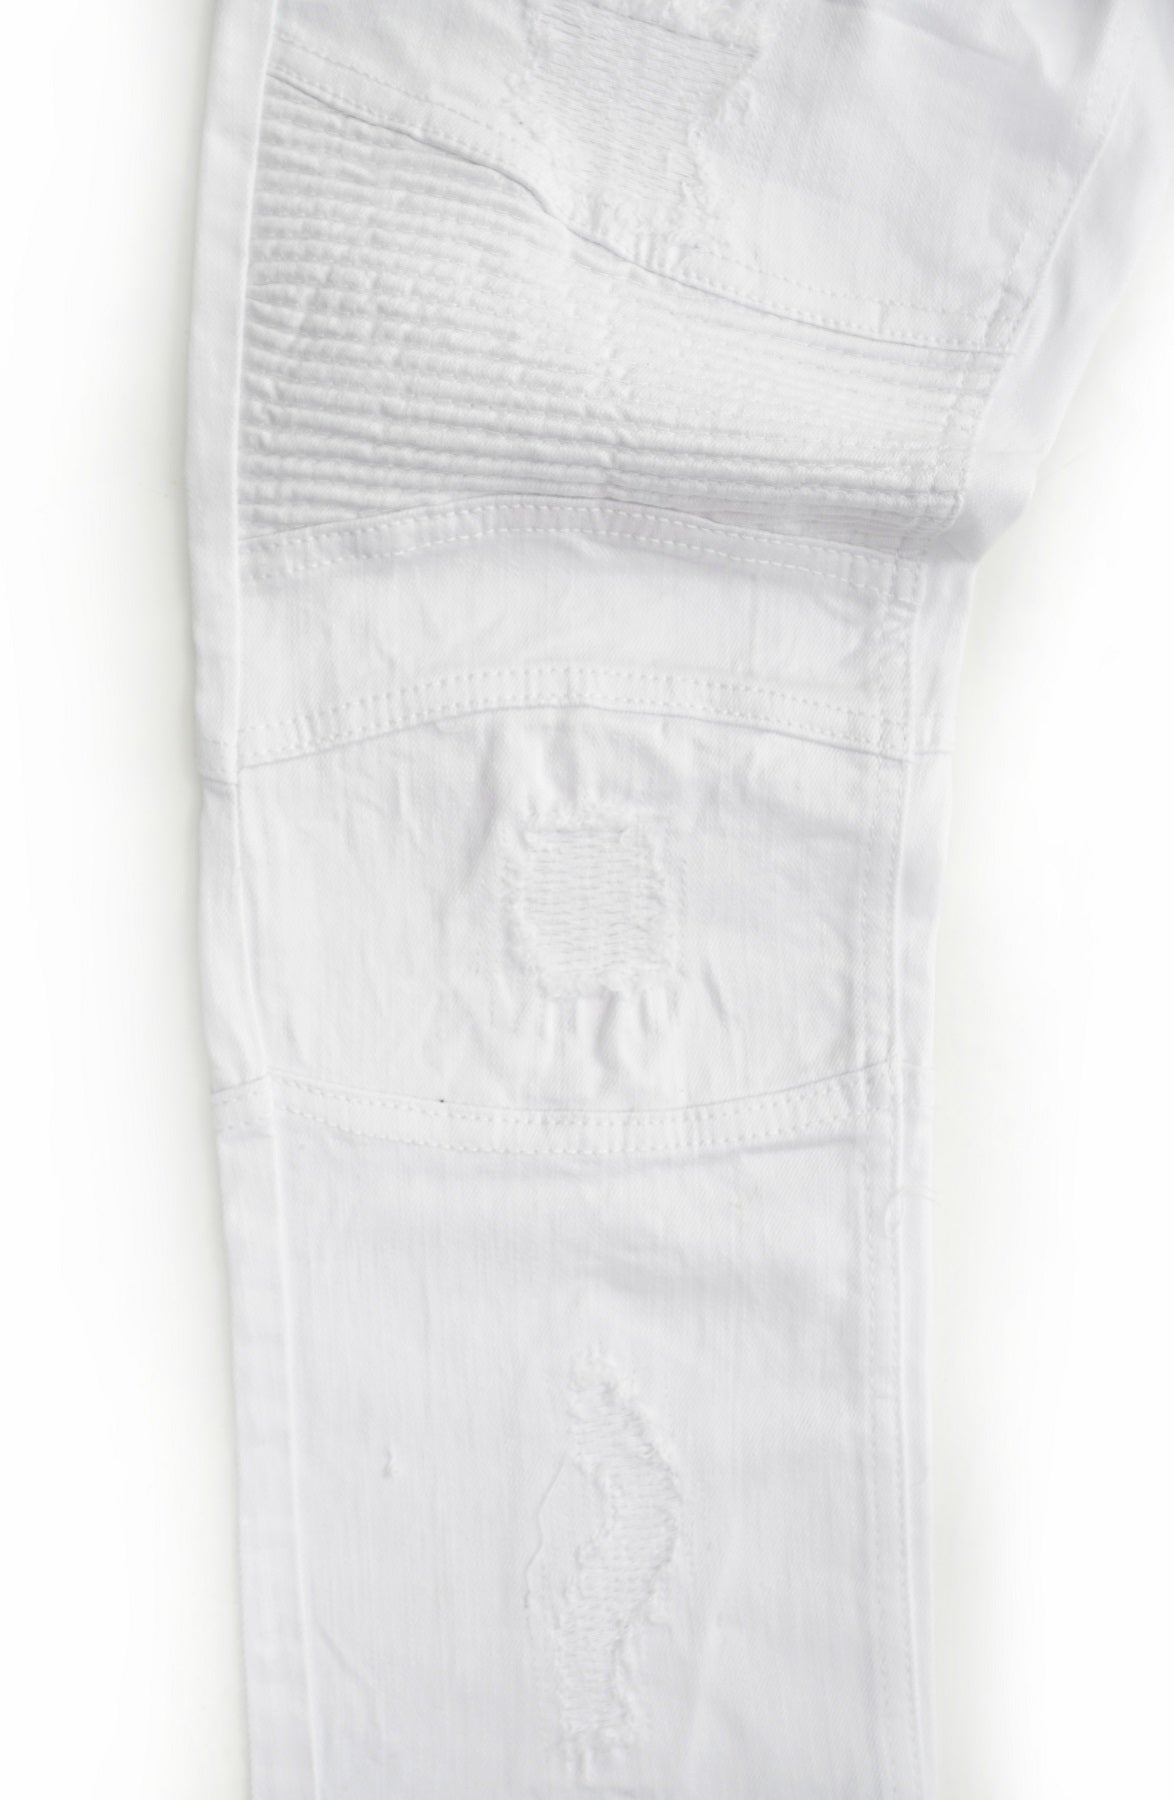 M1786 Makobi Prado Biker Jeans pẹlu Rip & Tunṣe - White